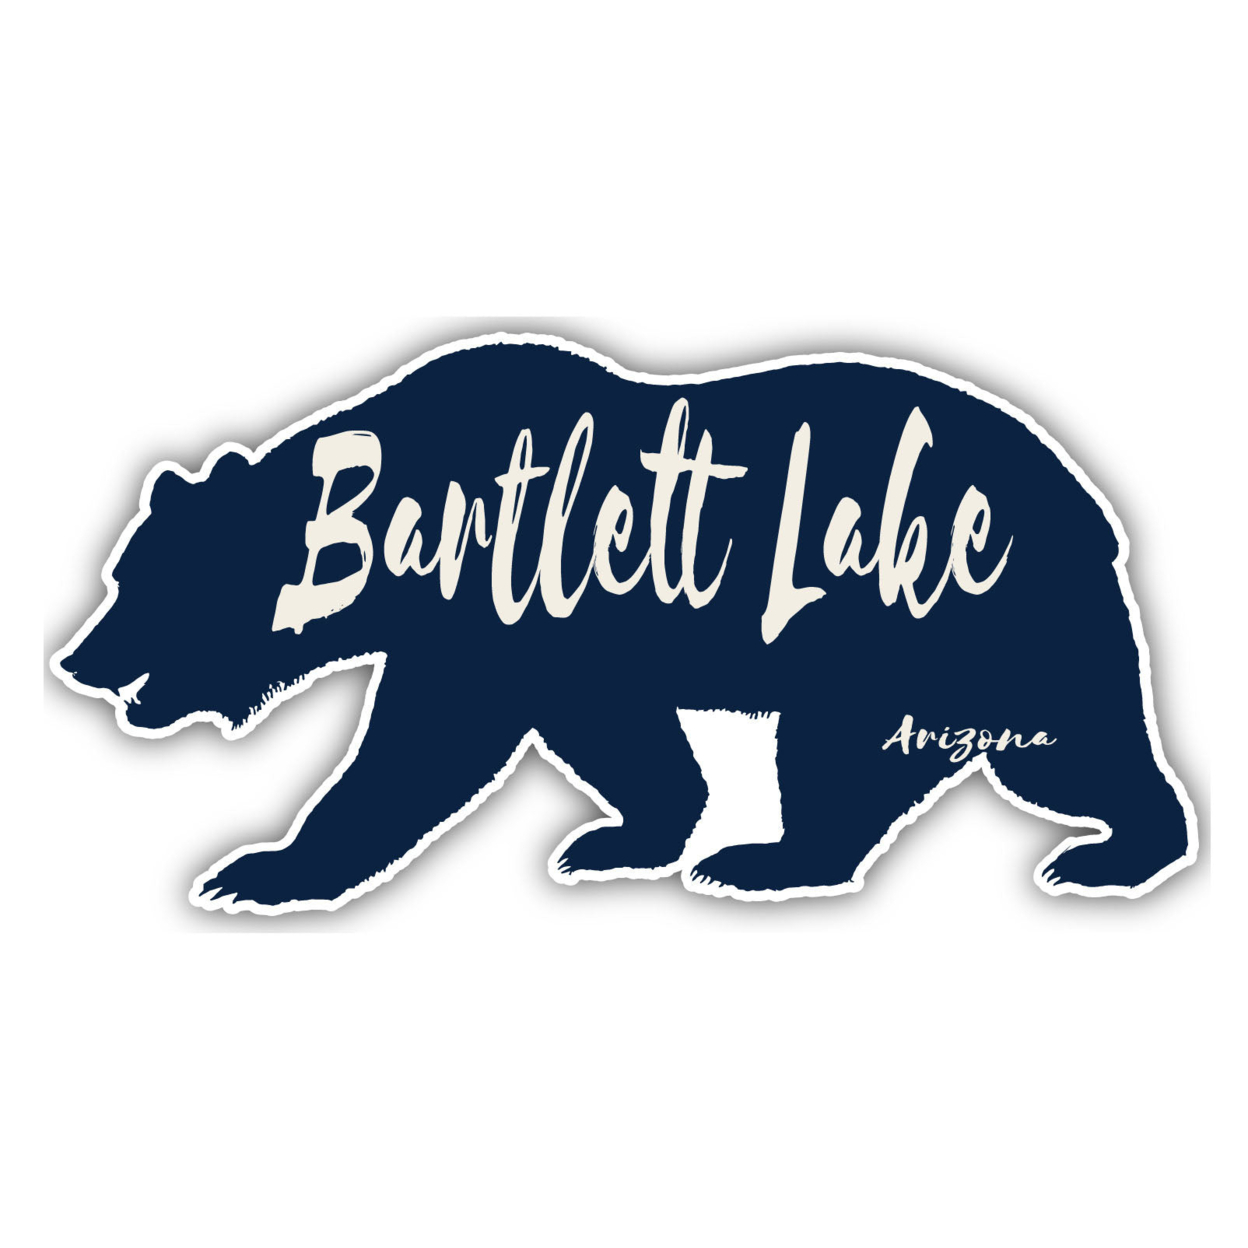 Bartlett Lake Arizona Souvenir Decorative Stickers (Choose Theme And Size) - Single Unit, 8-Inch, Bear